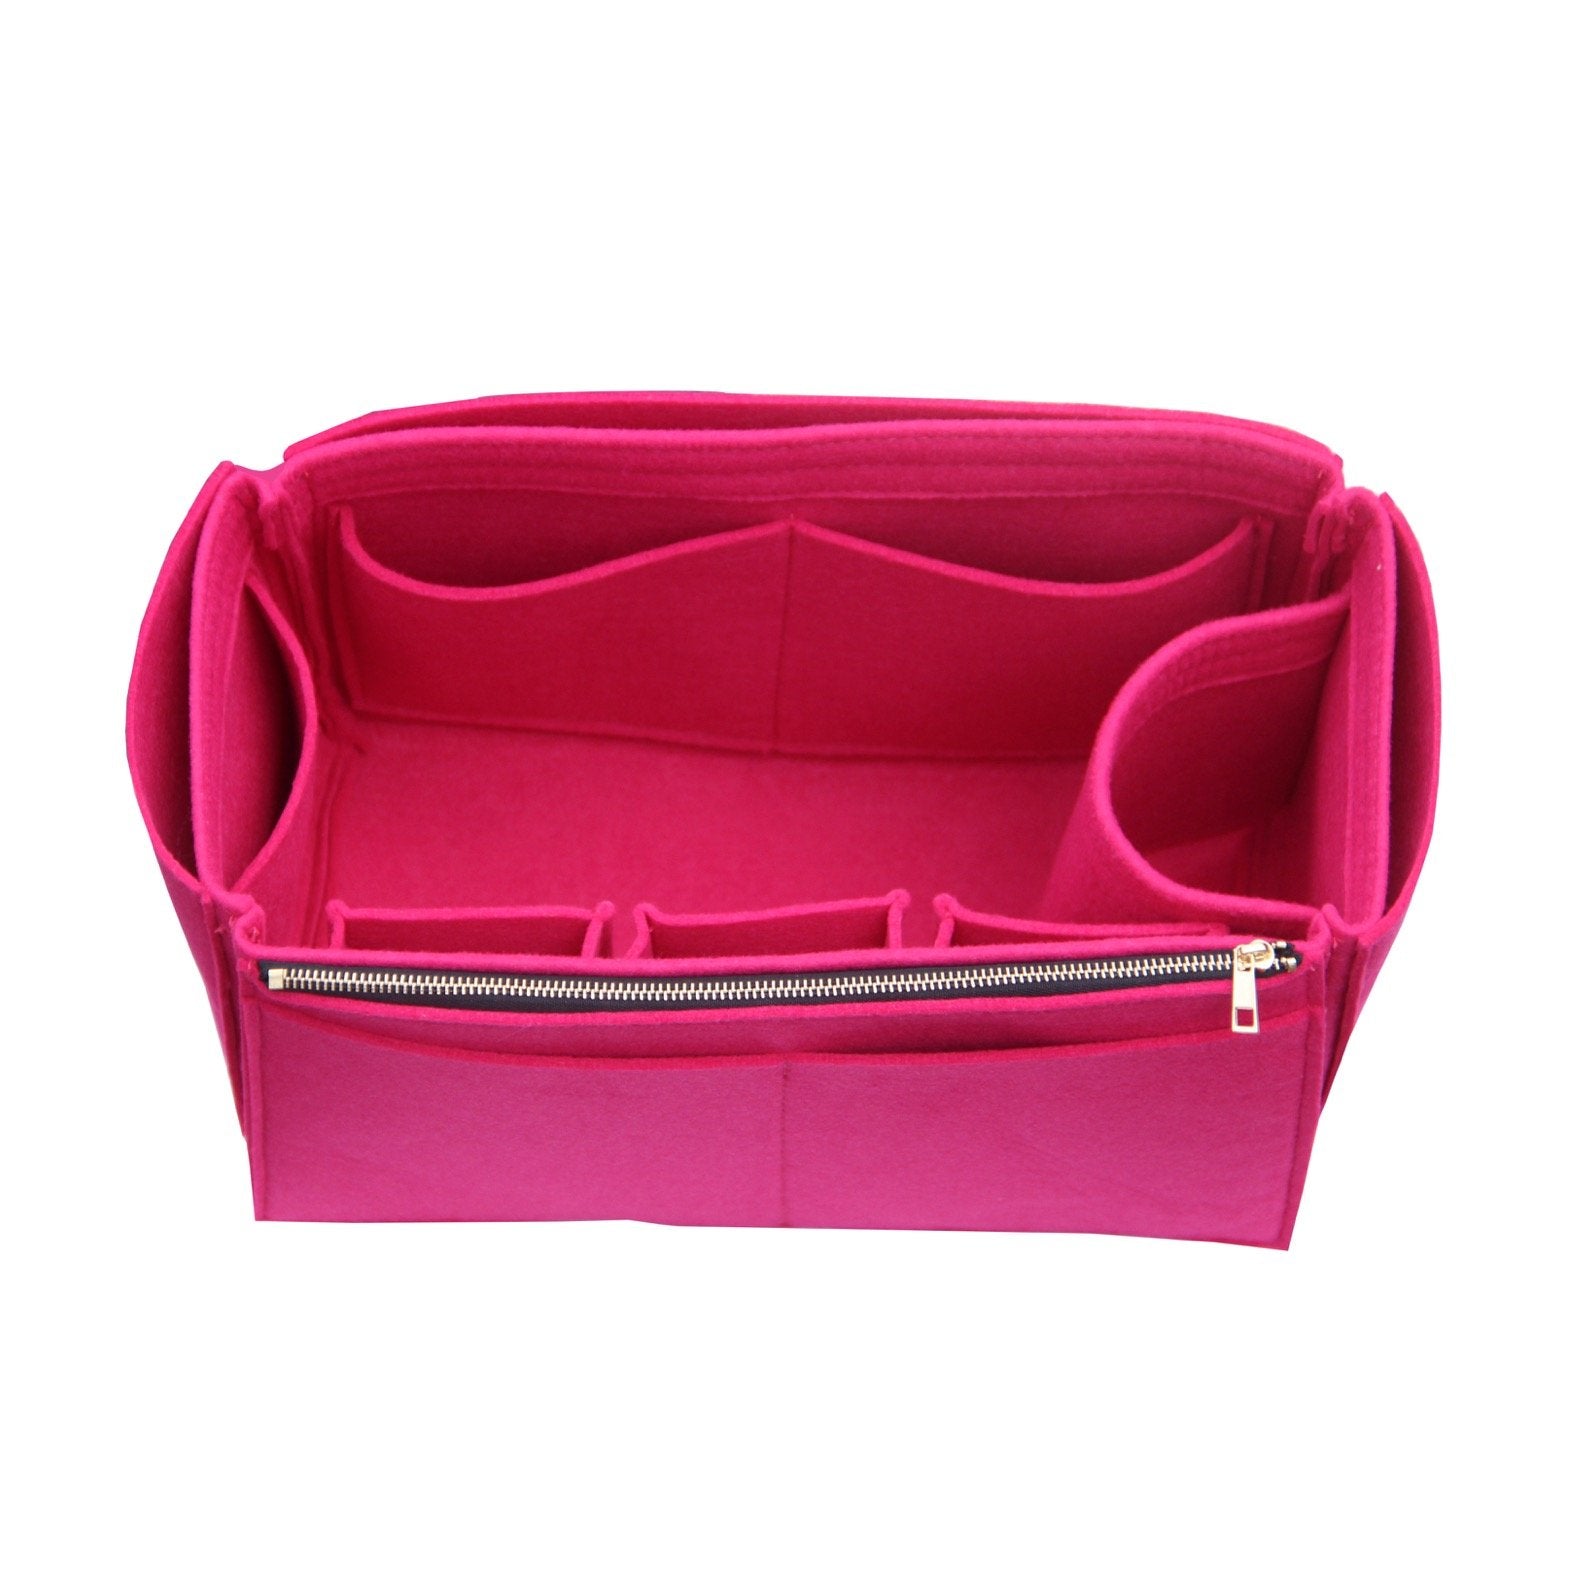 Lckaey purse Organizer insert conversion kit josephine ror lv wallet Sarah  bag Emilie Wallet, Bag accessories, inner bag 3015-Pink